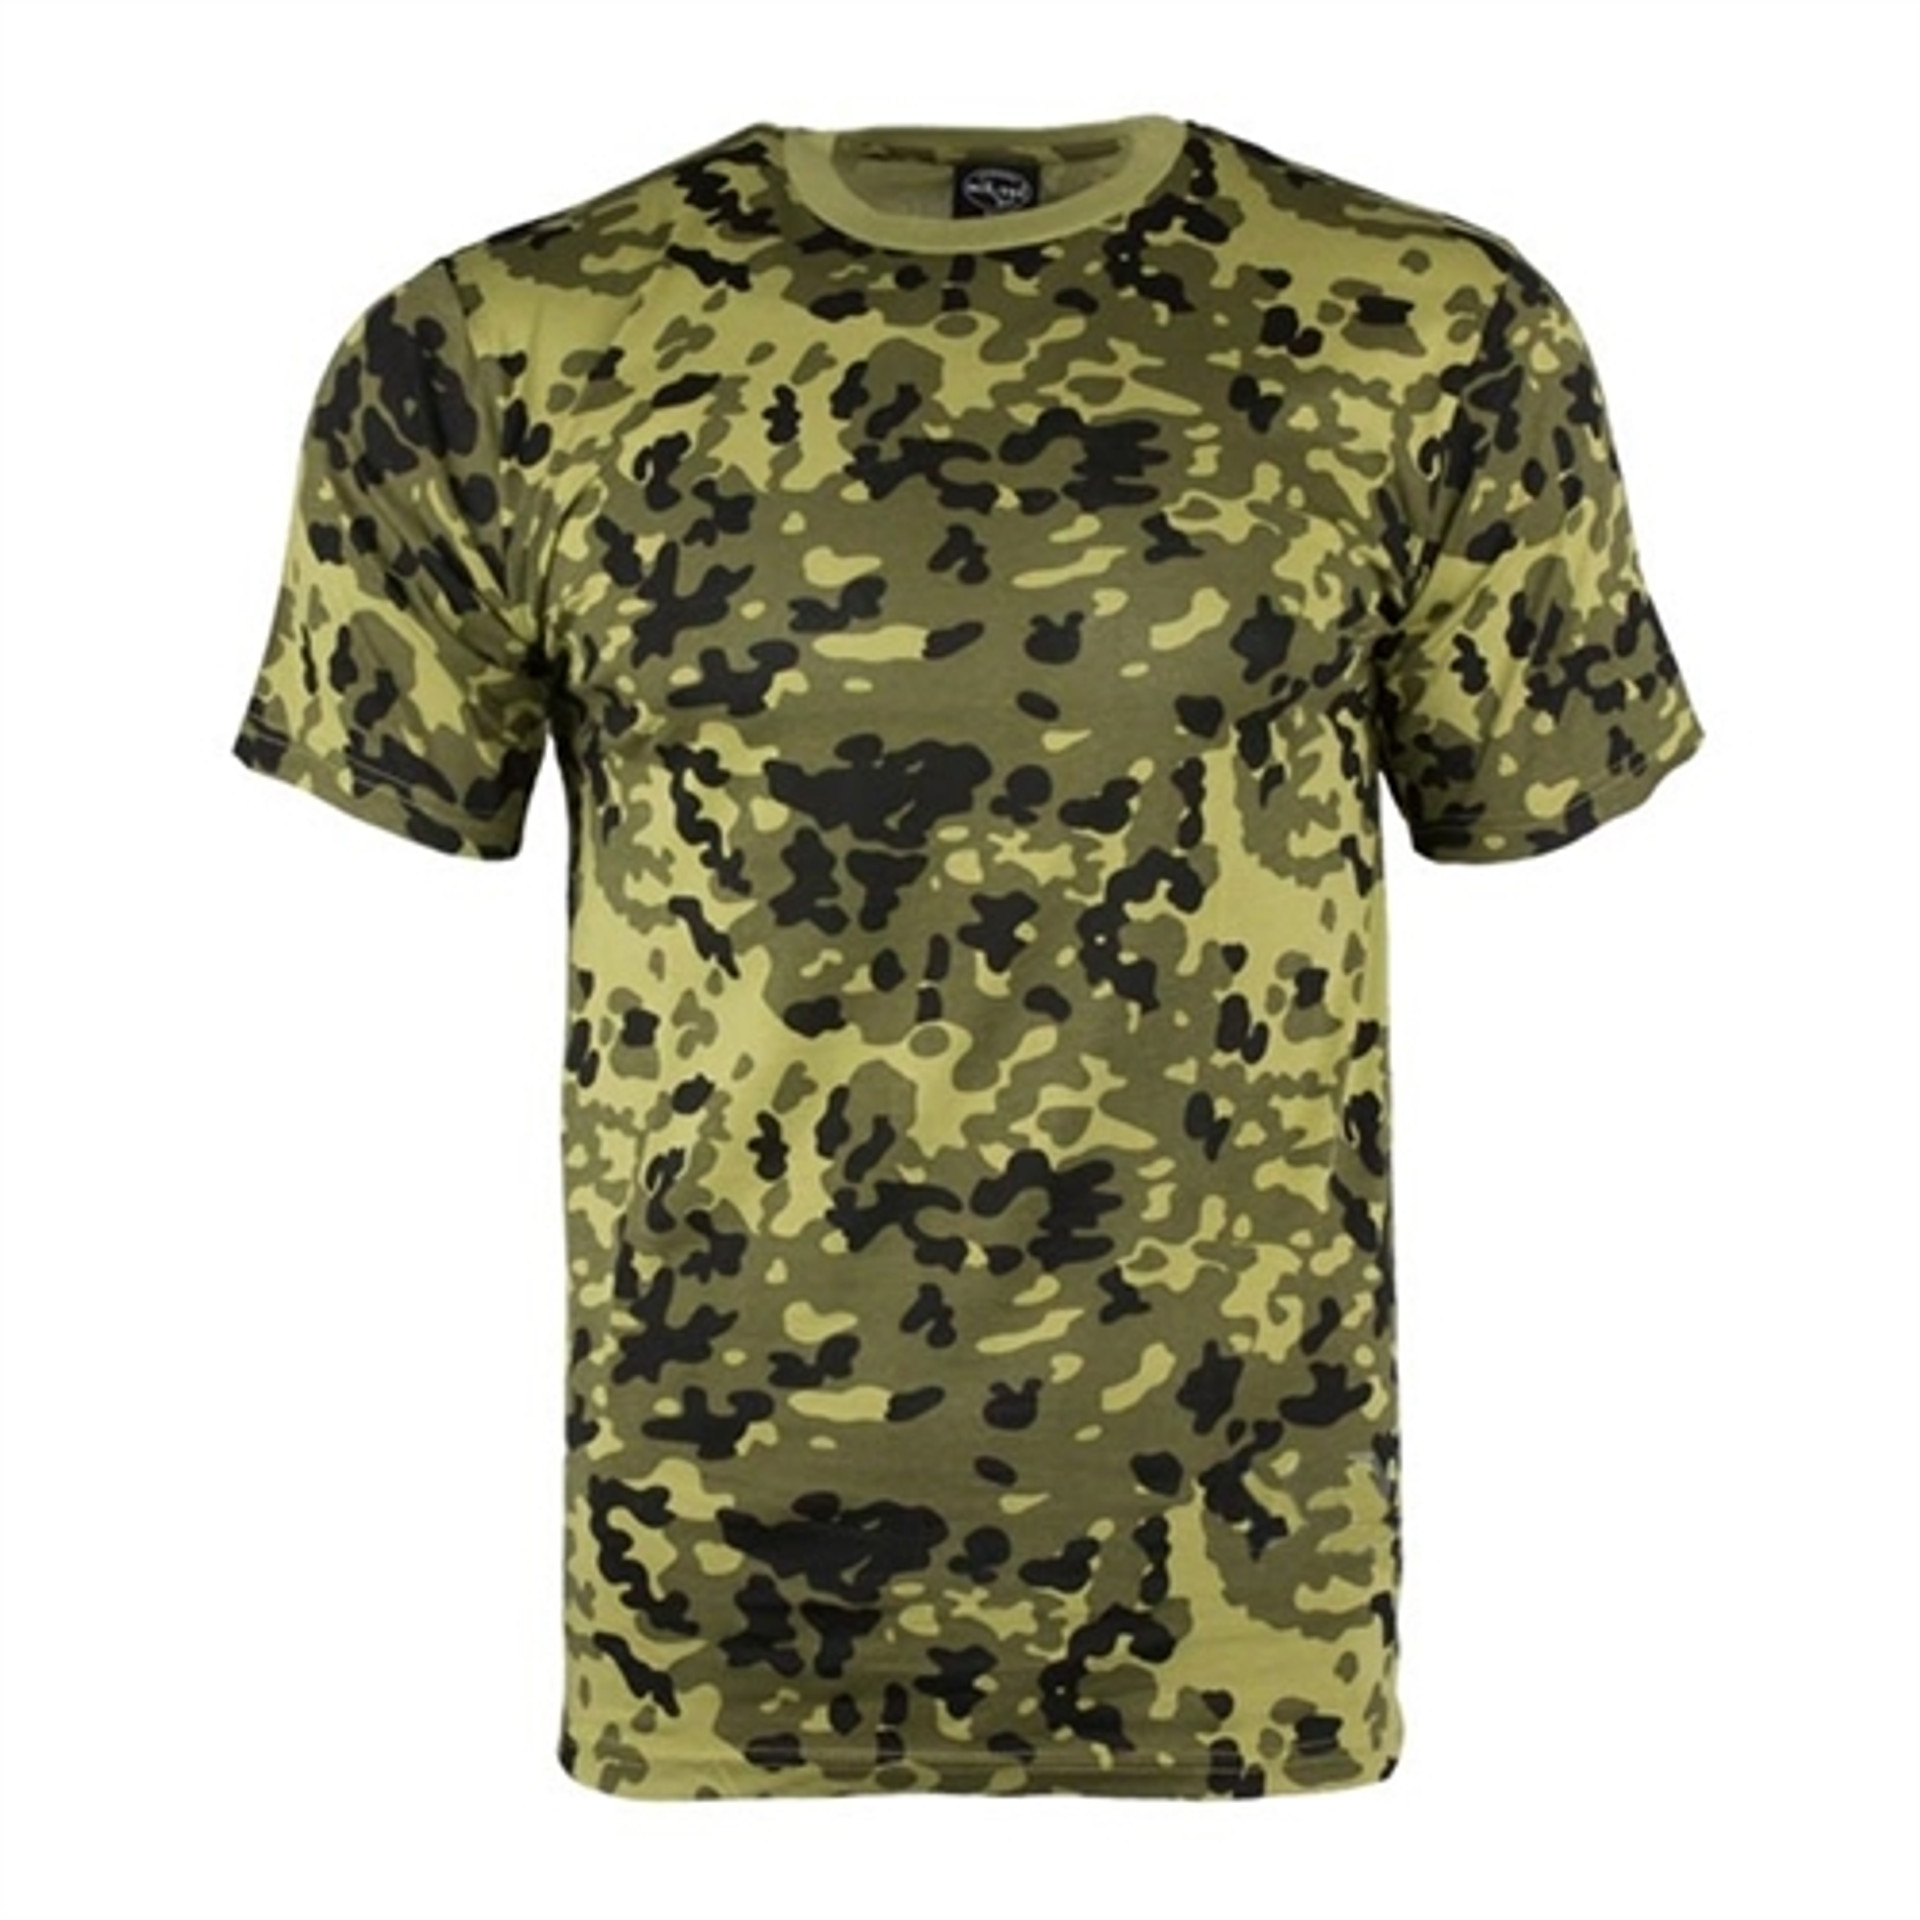 MIL-TEC Danish Army Flecktarn Camo T-Shirt from Hessen Surplus